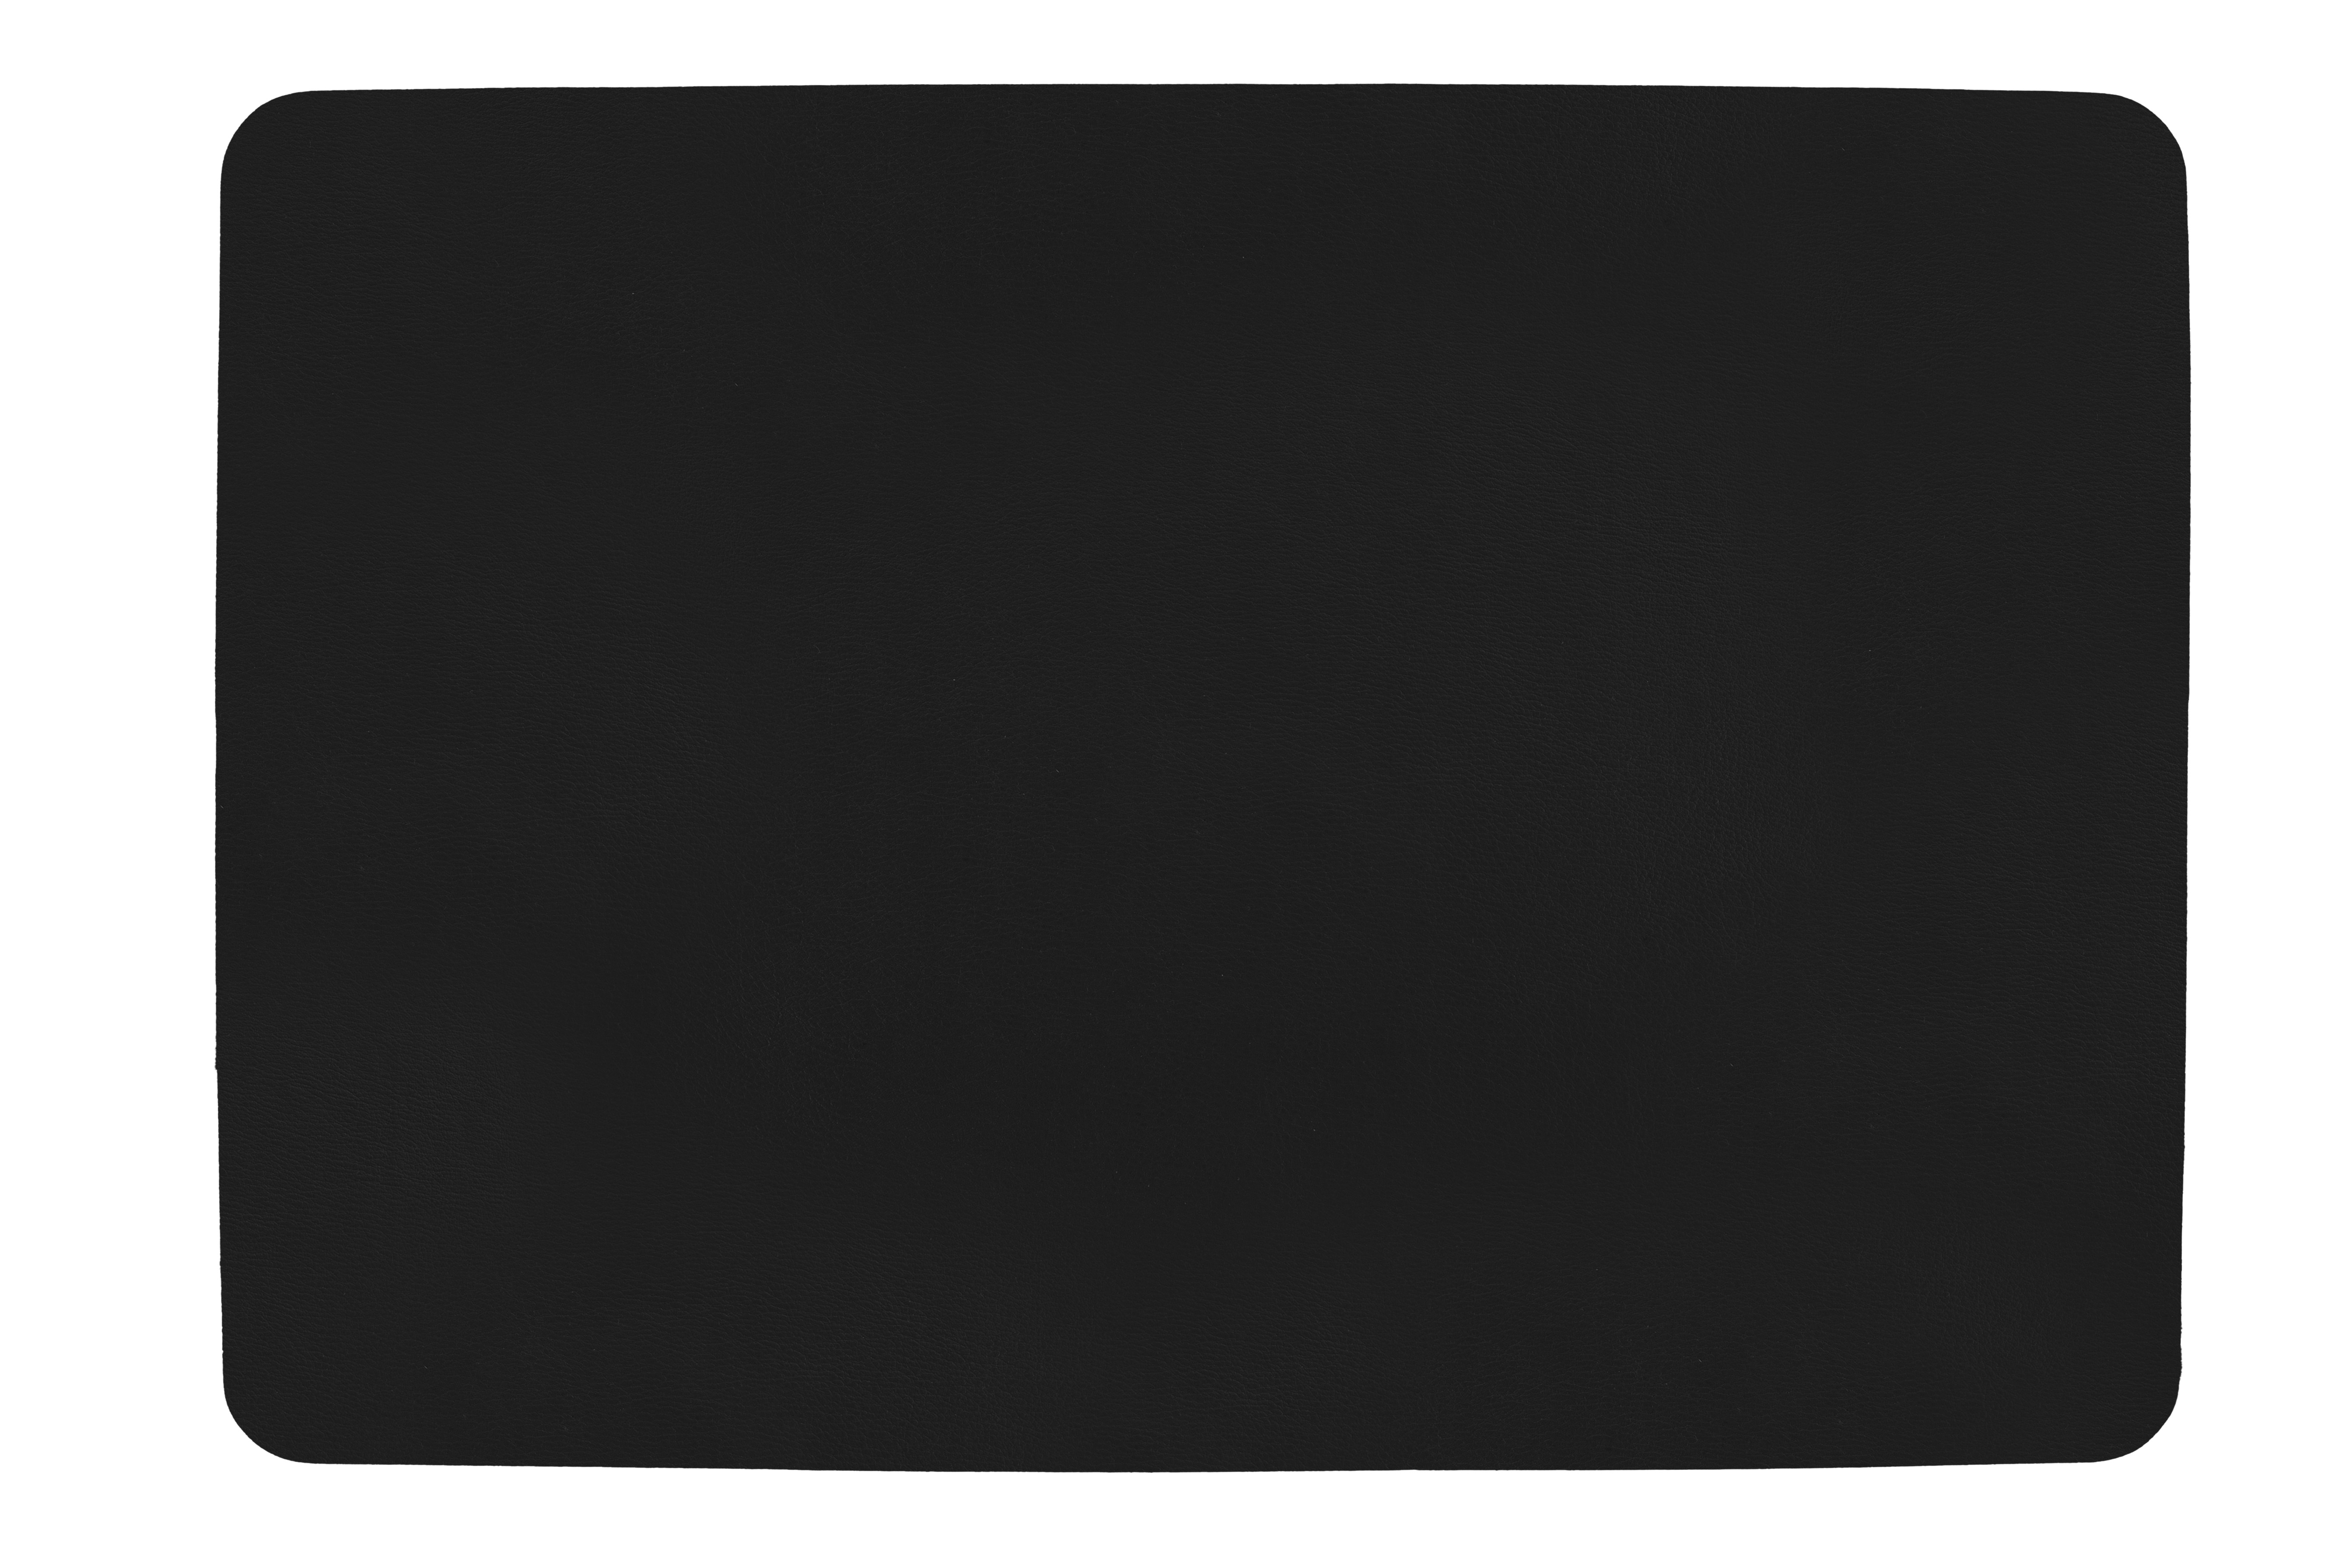 Placemat TOGO, 33x45cm, black - set of 6 in giftbox